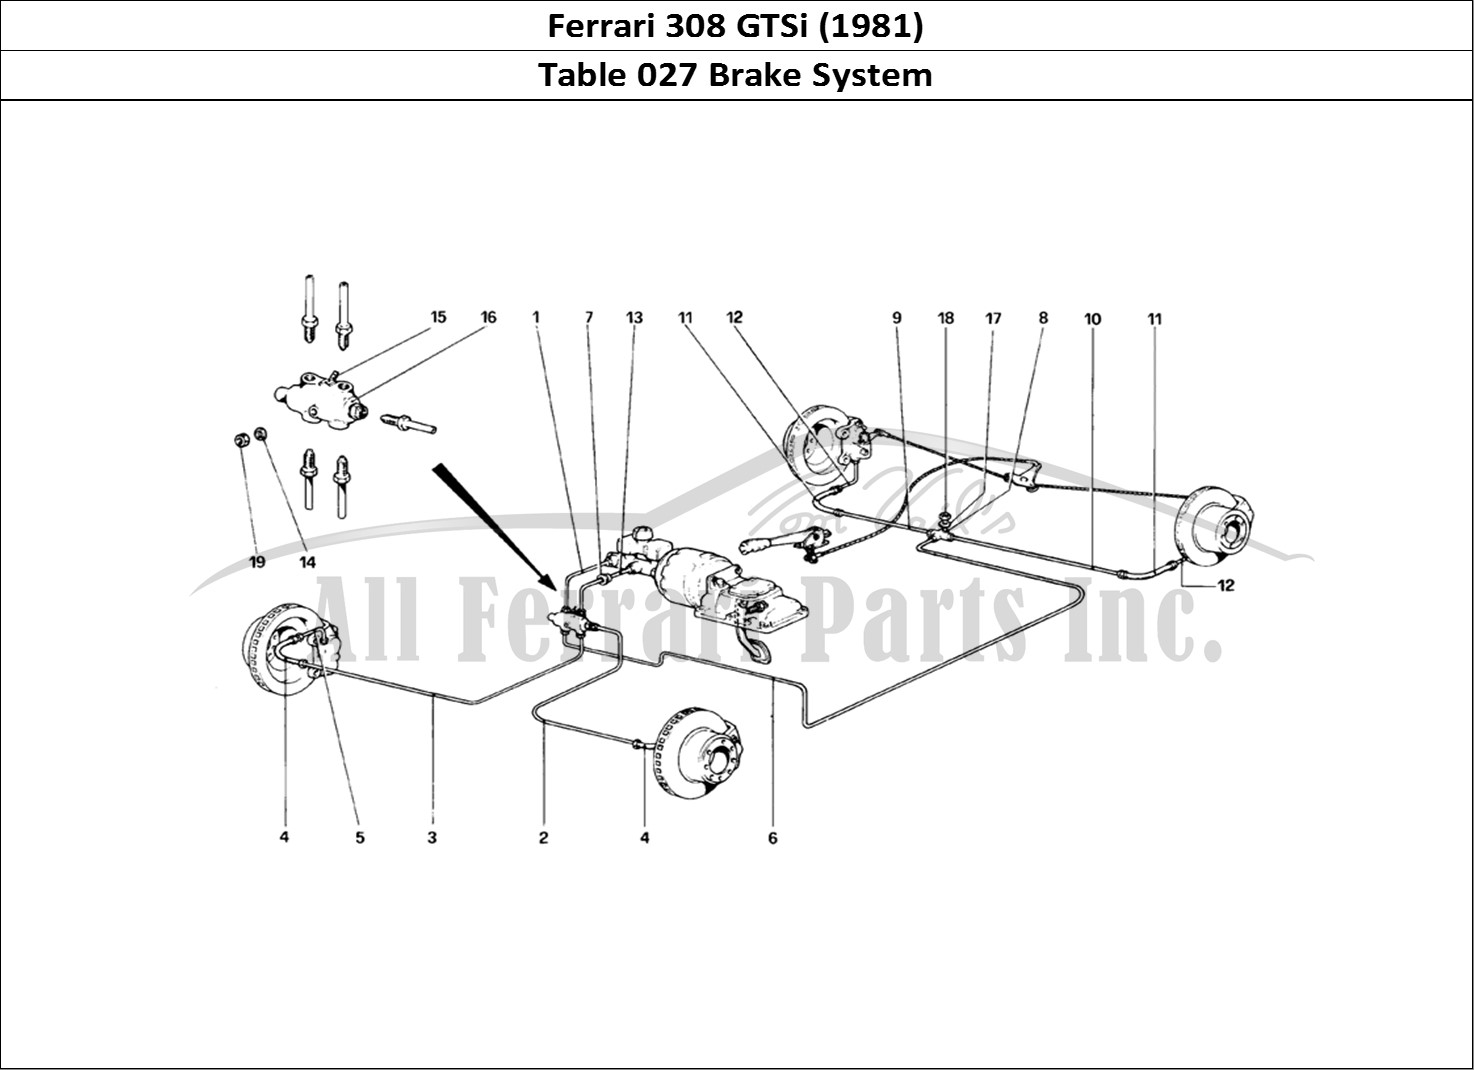 Ferrari Parts Ferrari 308 GTBi (1981) Page 027 Brake System